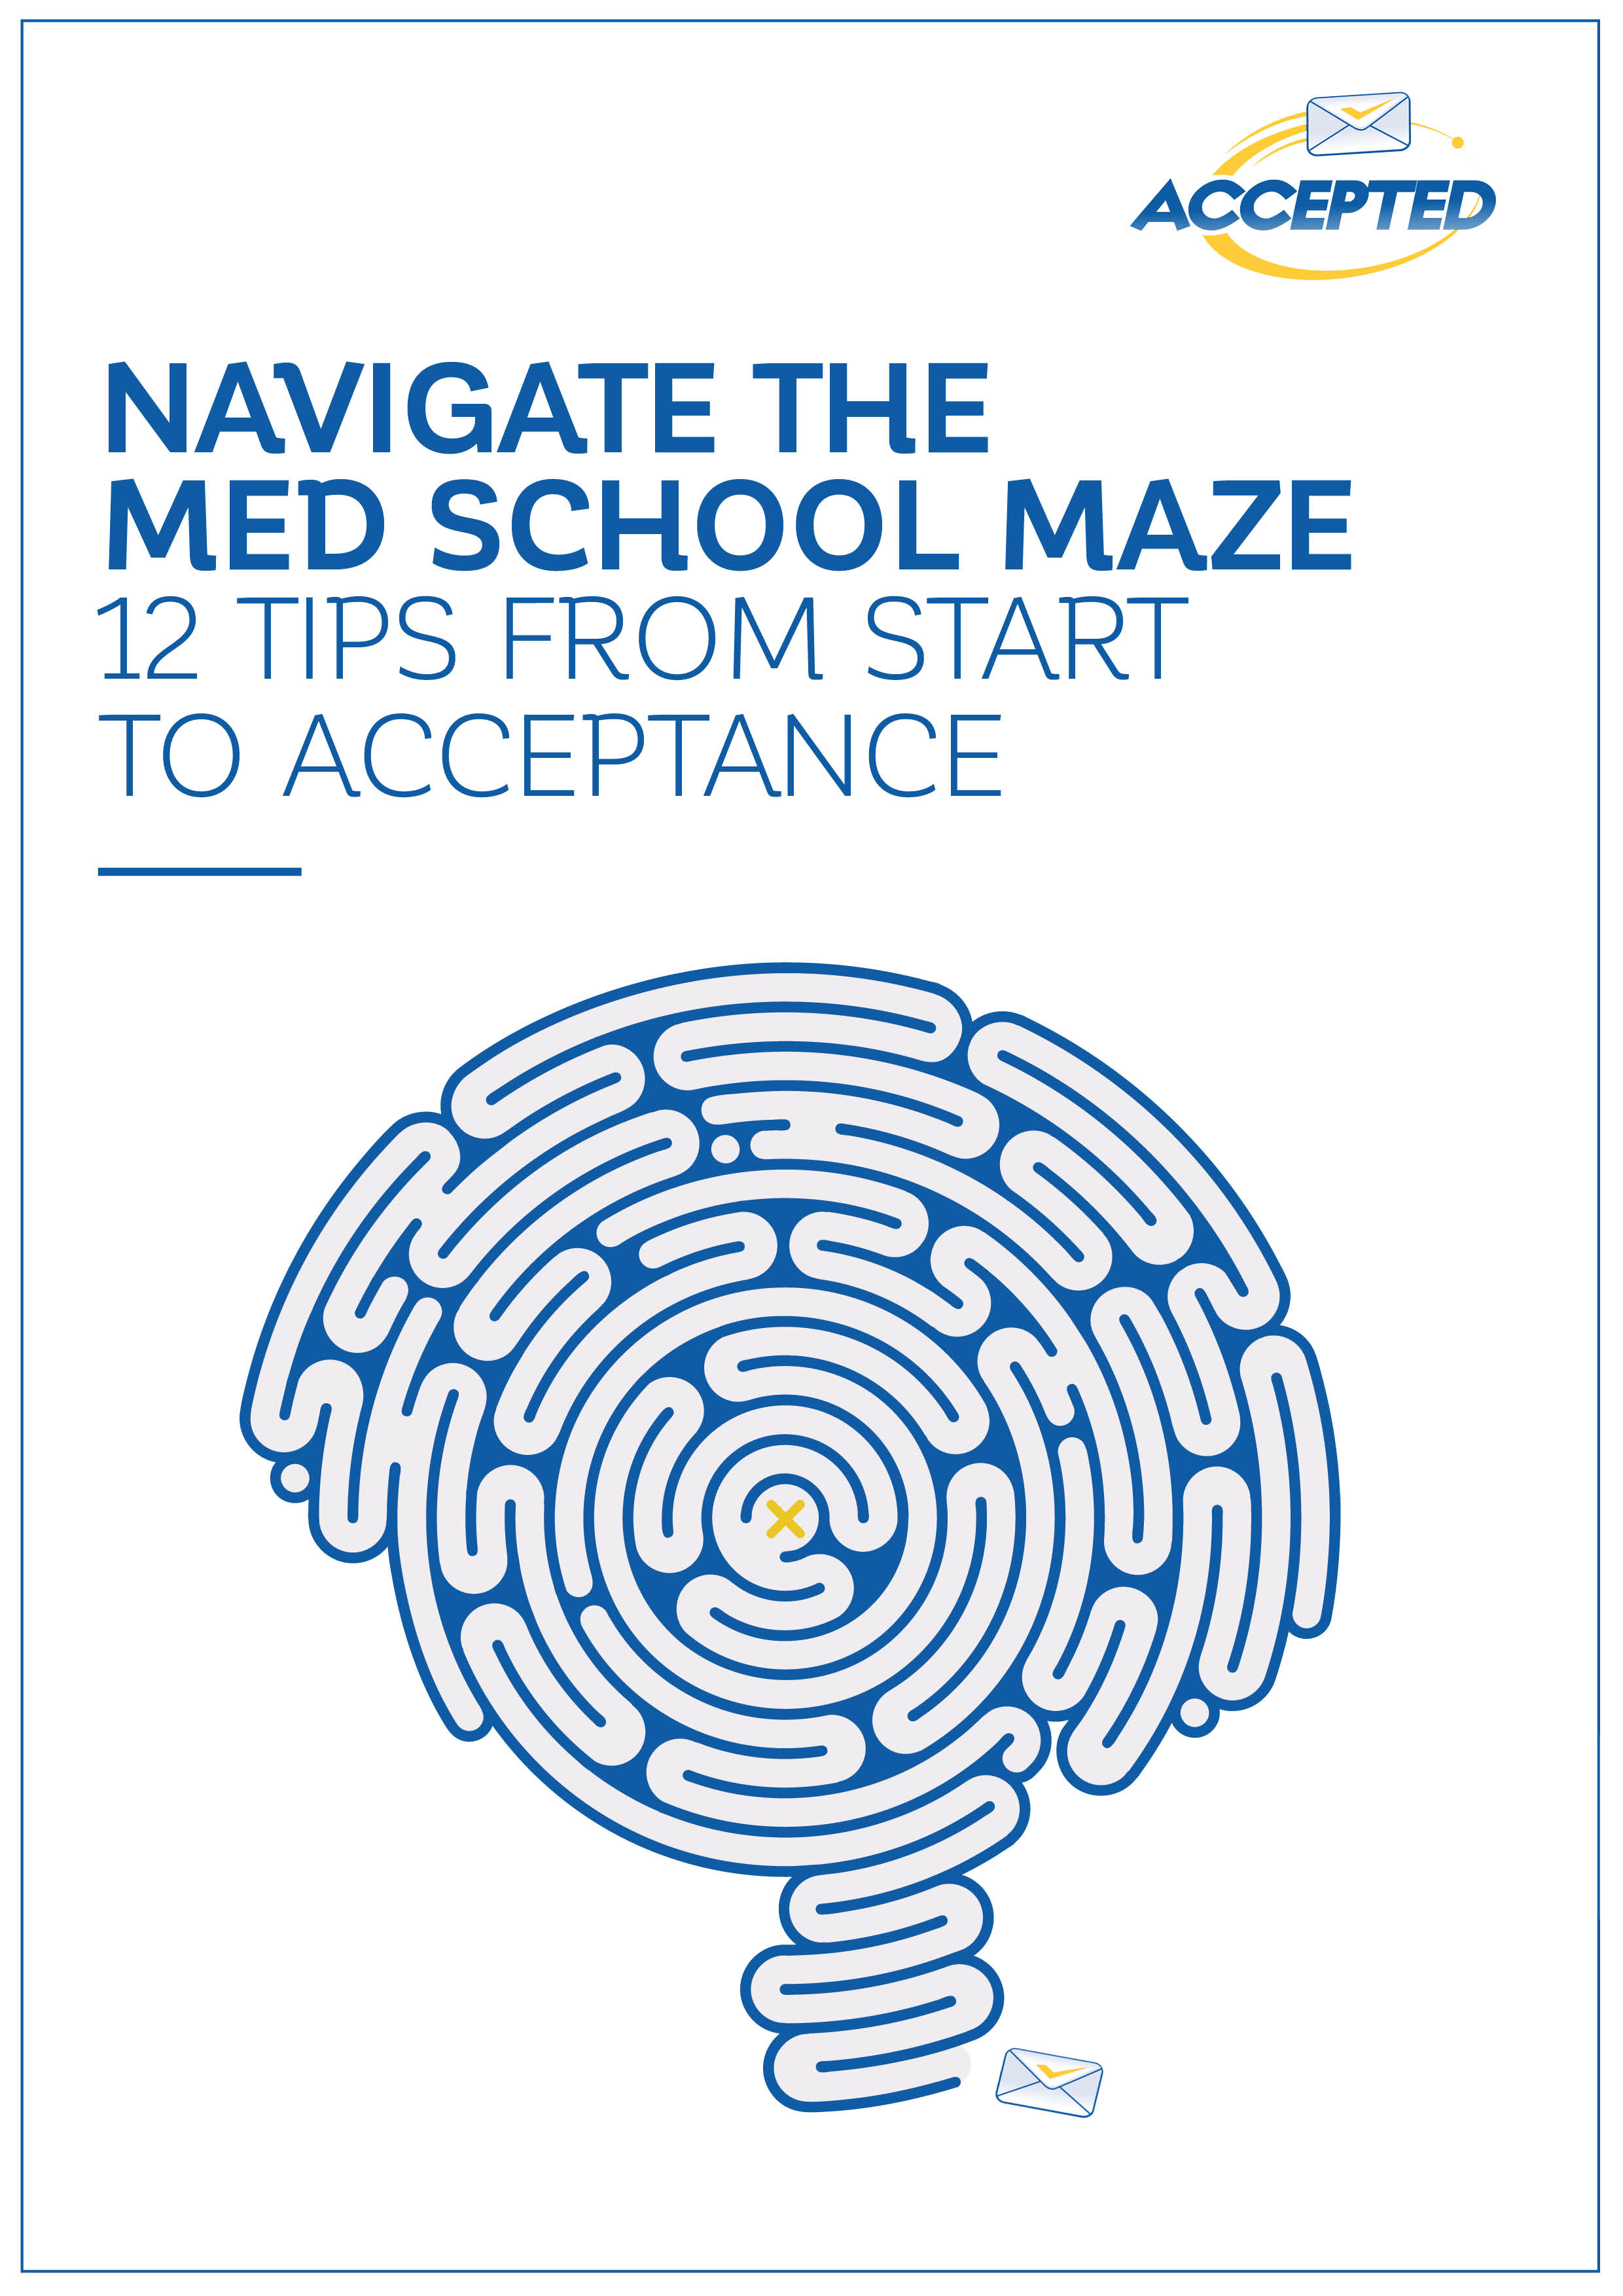 Navigate the Med School Maze